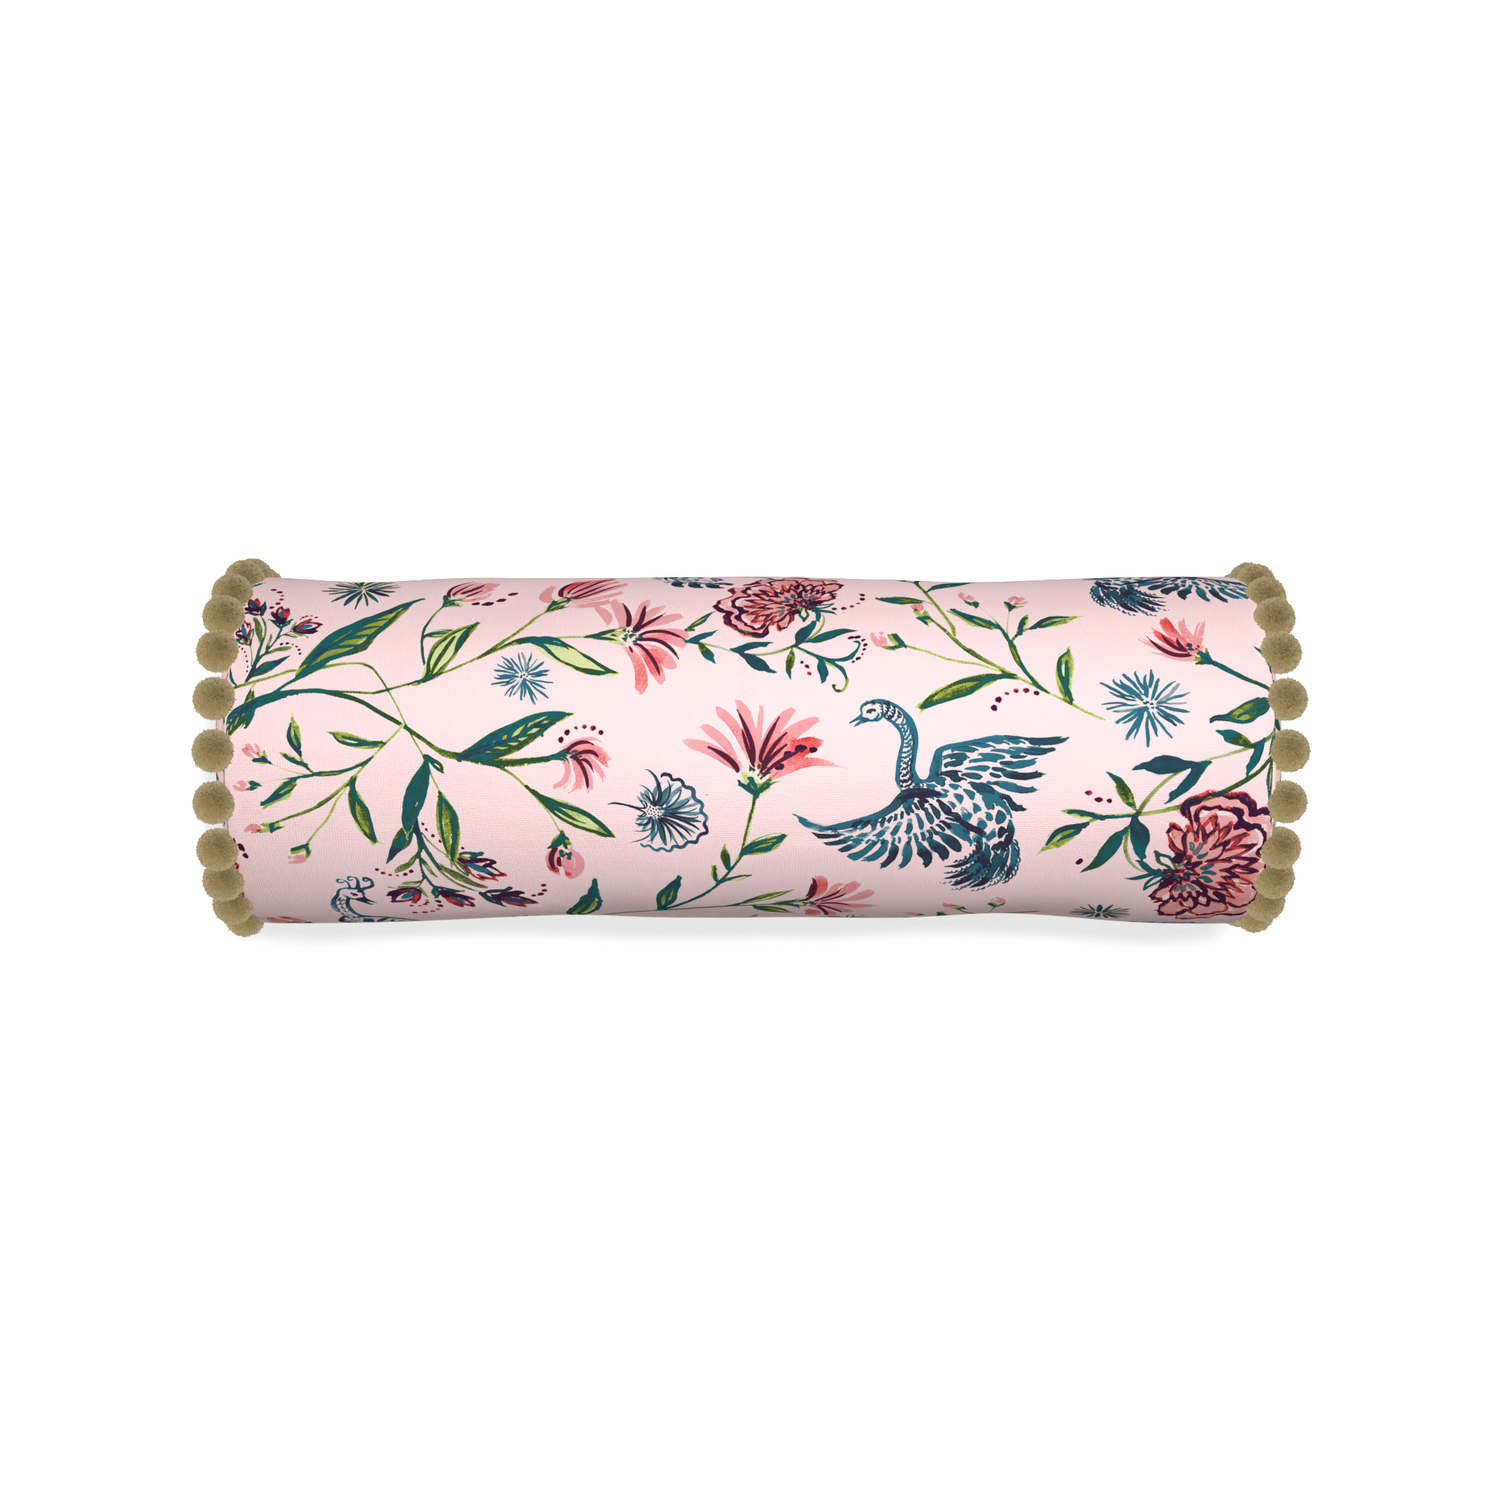 Bolster daphne rose custom pillow with olive pom pom on white background